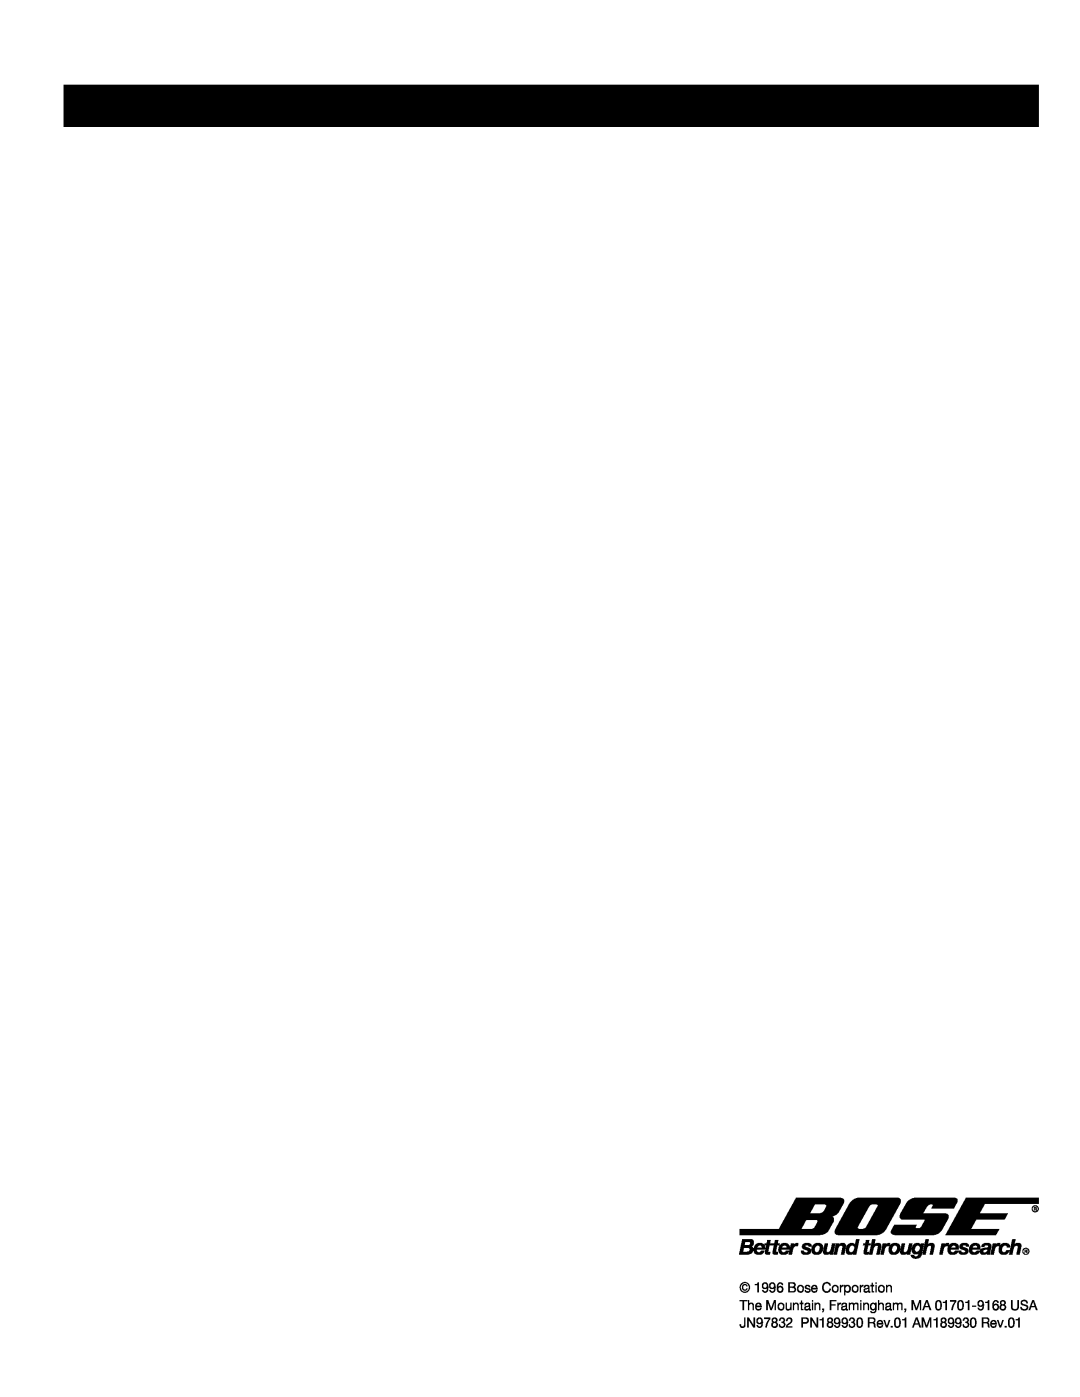 Bose manual Bose Corporation, The Mountain, Framingham, MA 01701-9168USA, JN97832 PN189930 Rev.01 AM189930 Rev.01 